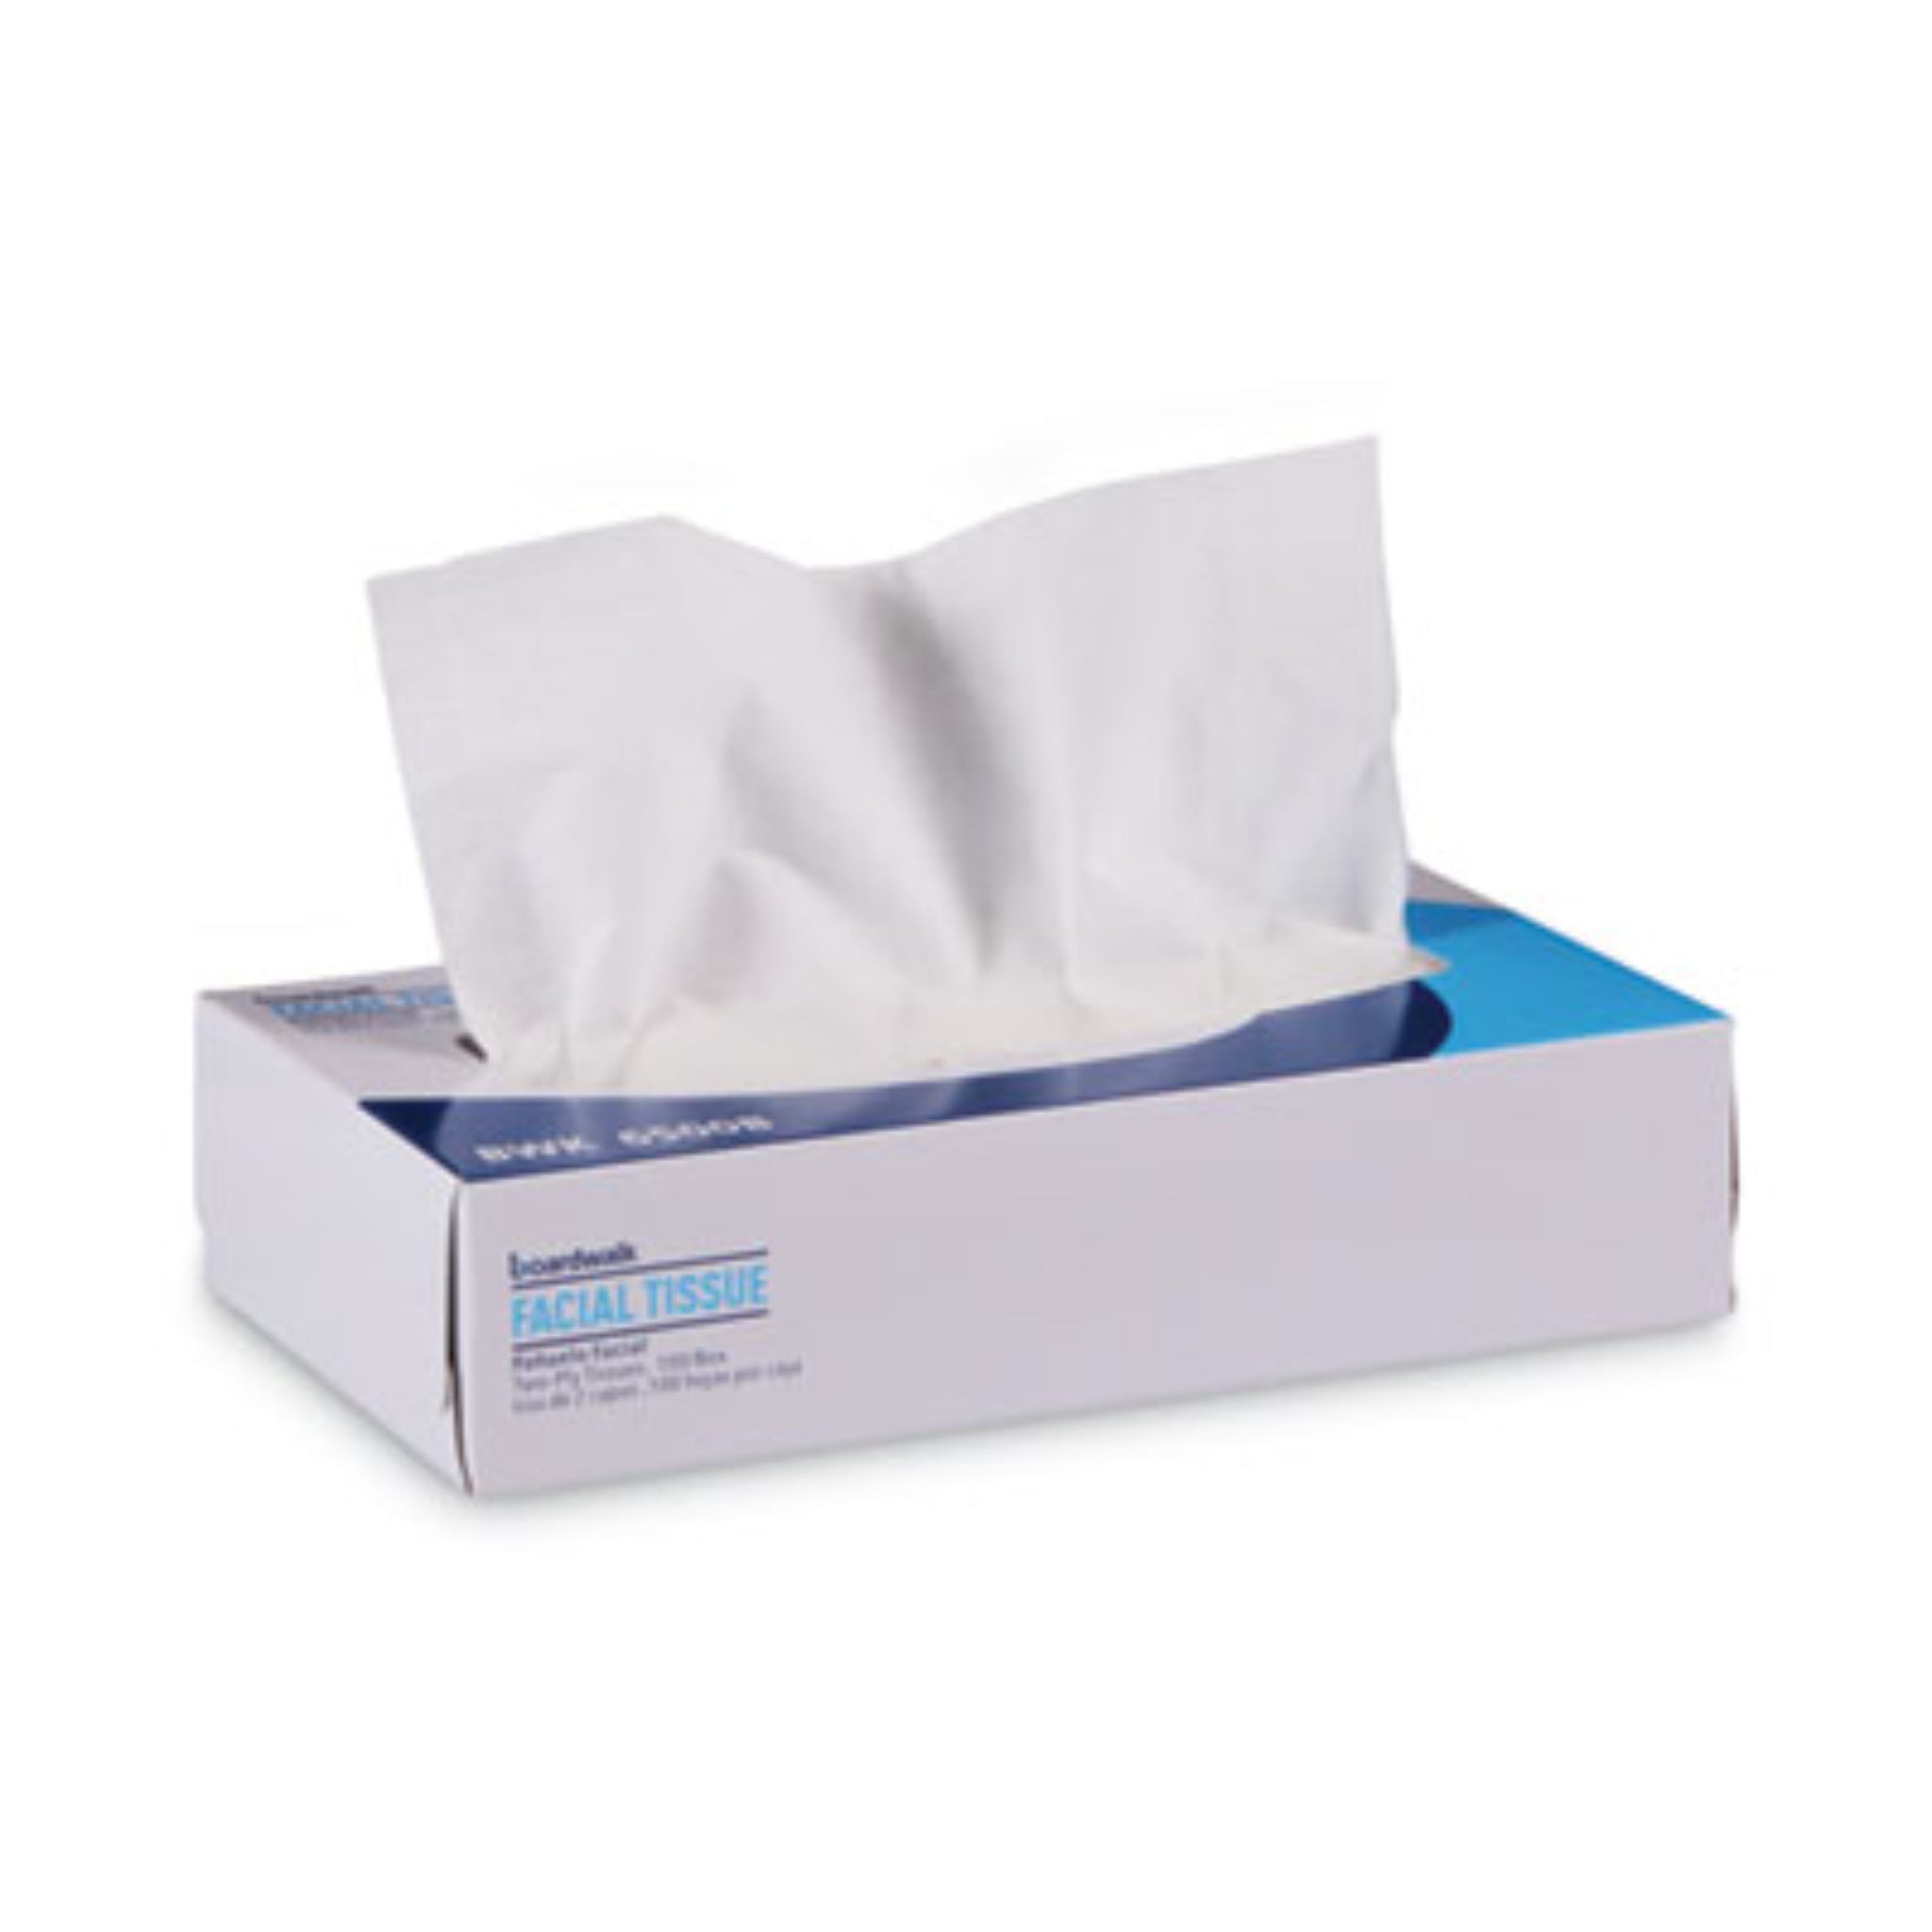 BOARDWALK BWK6500B Office Packs Facial Tissue, 2-Ply, White, Flat Box, Carton of 30 Boxes